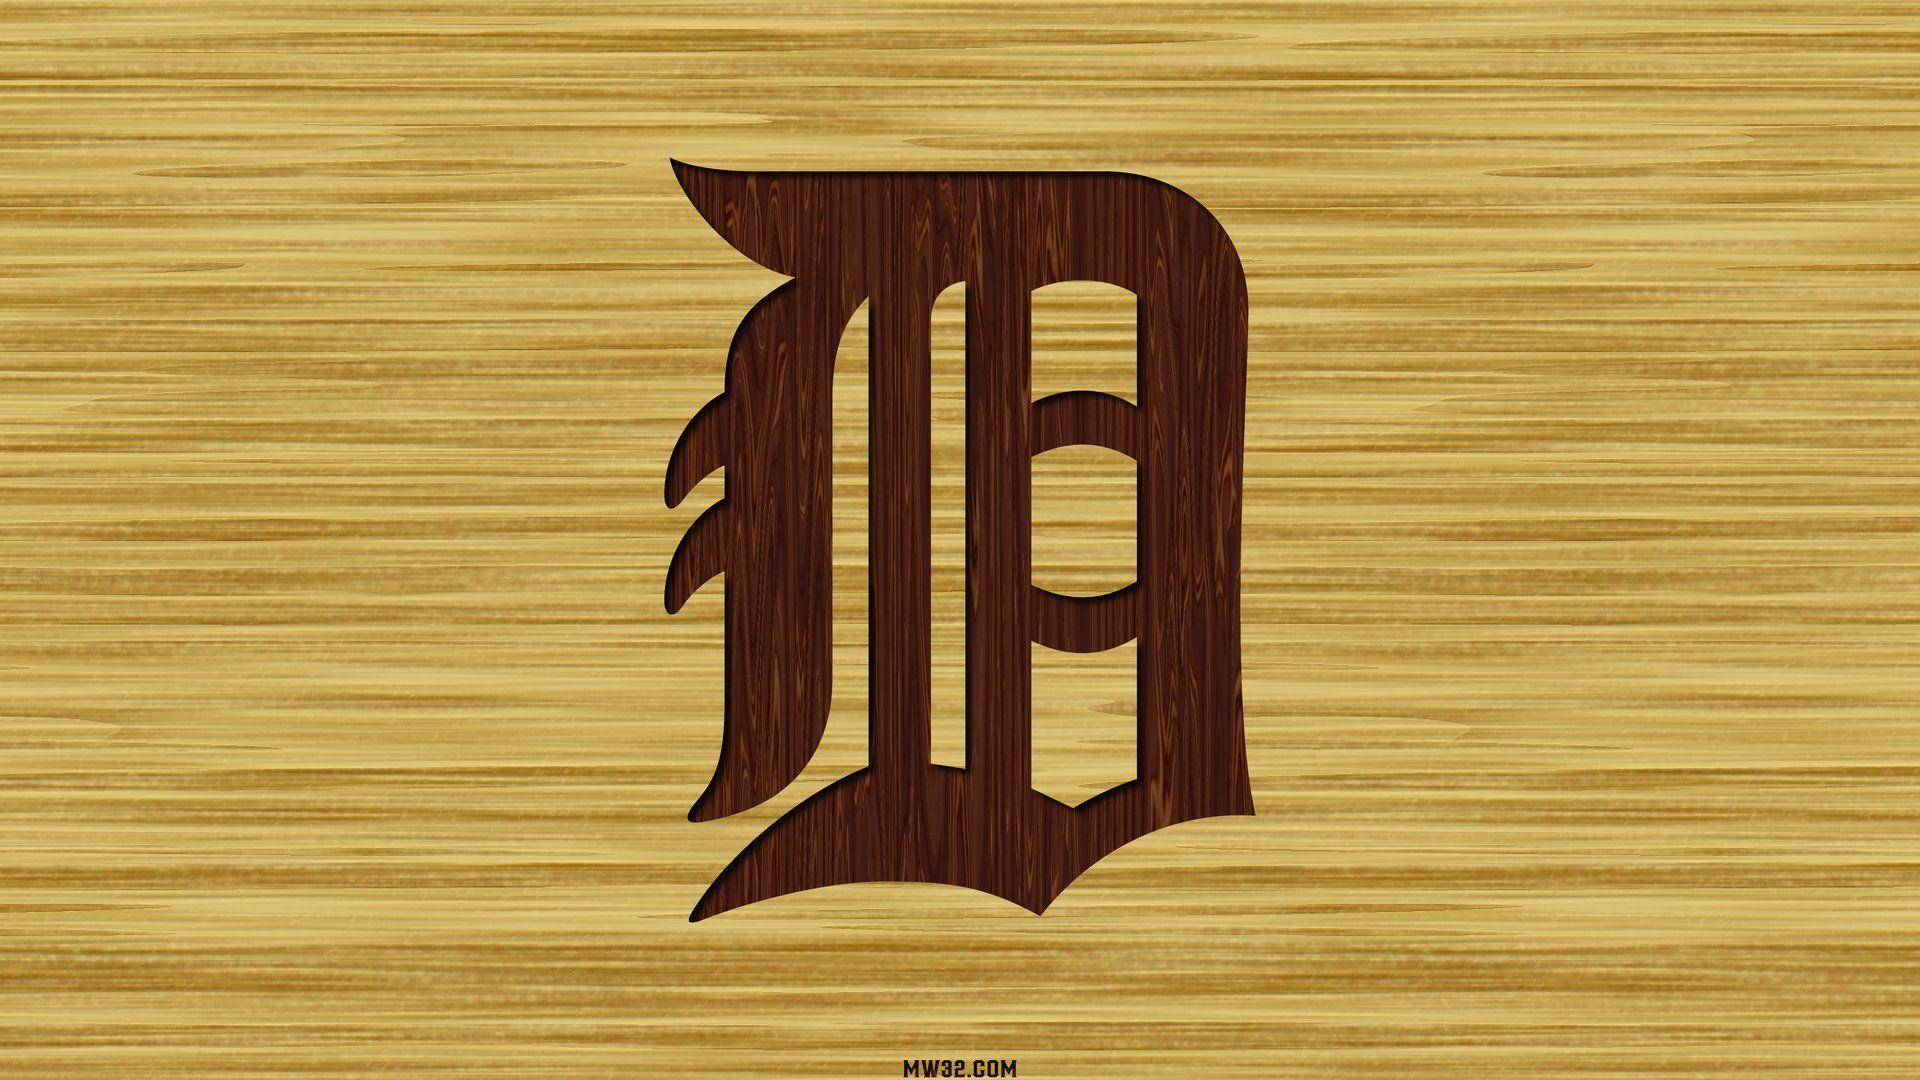 Detroit Tigers D 895824